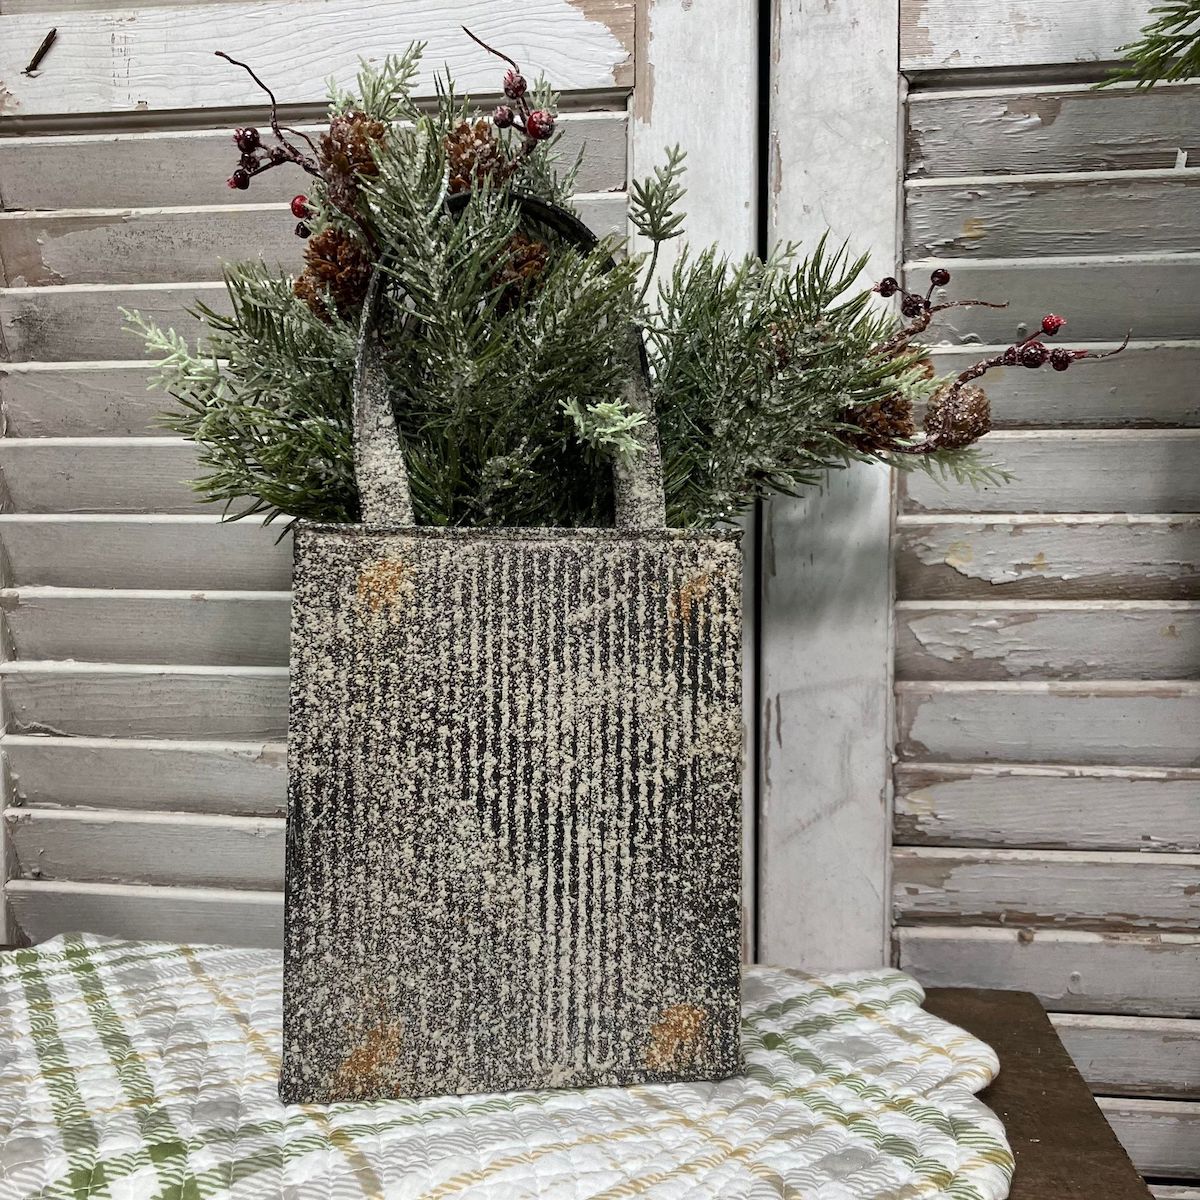 Galvanized Market Basket with Snowcapped Pine Bushes